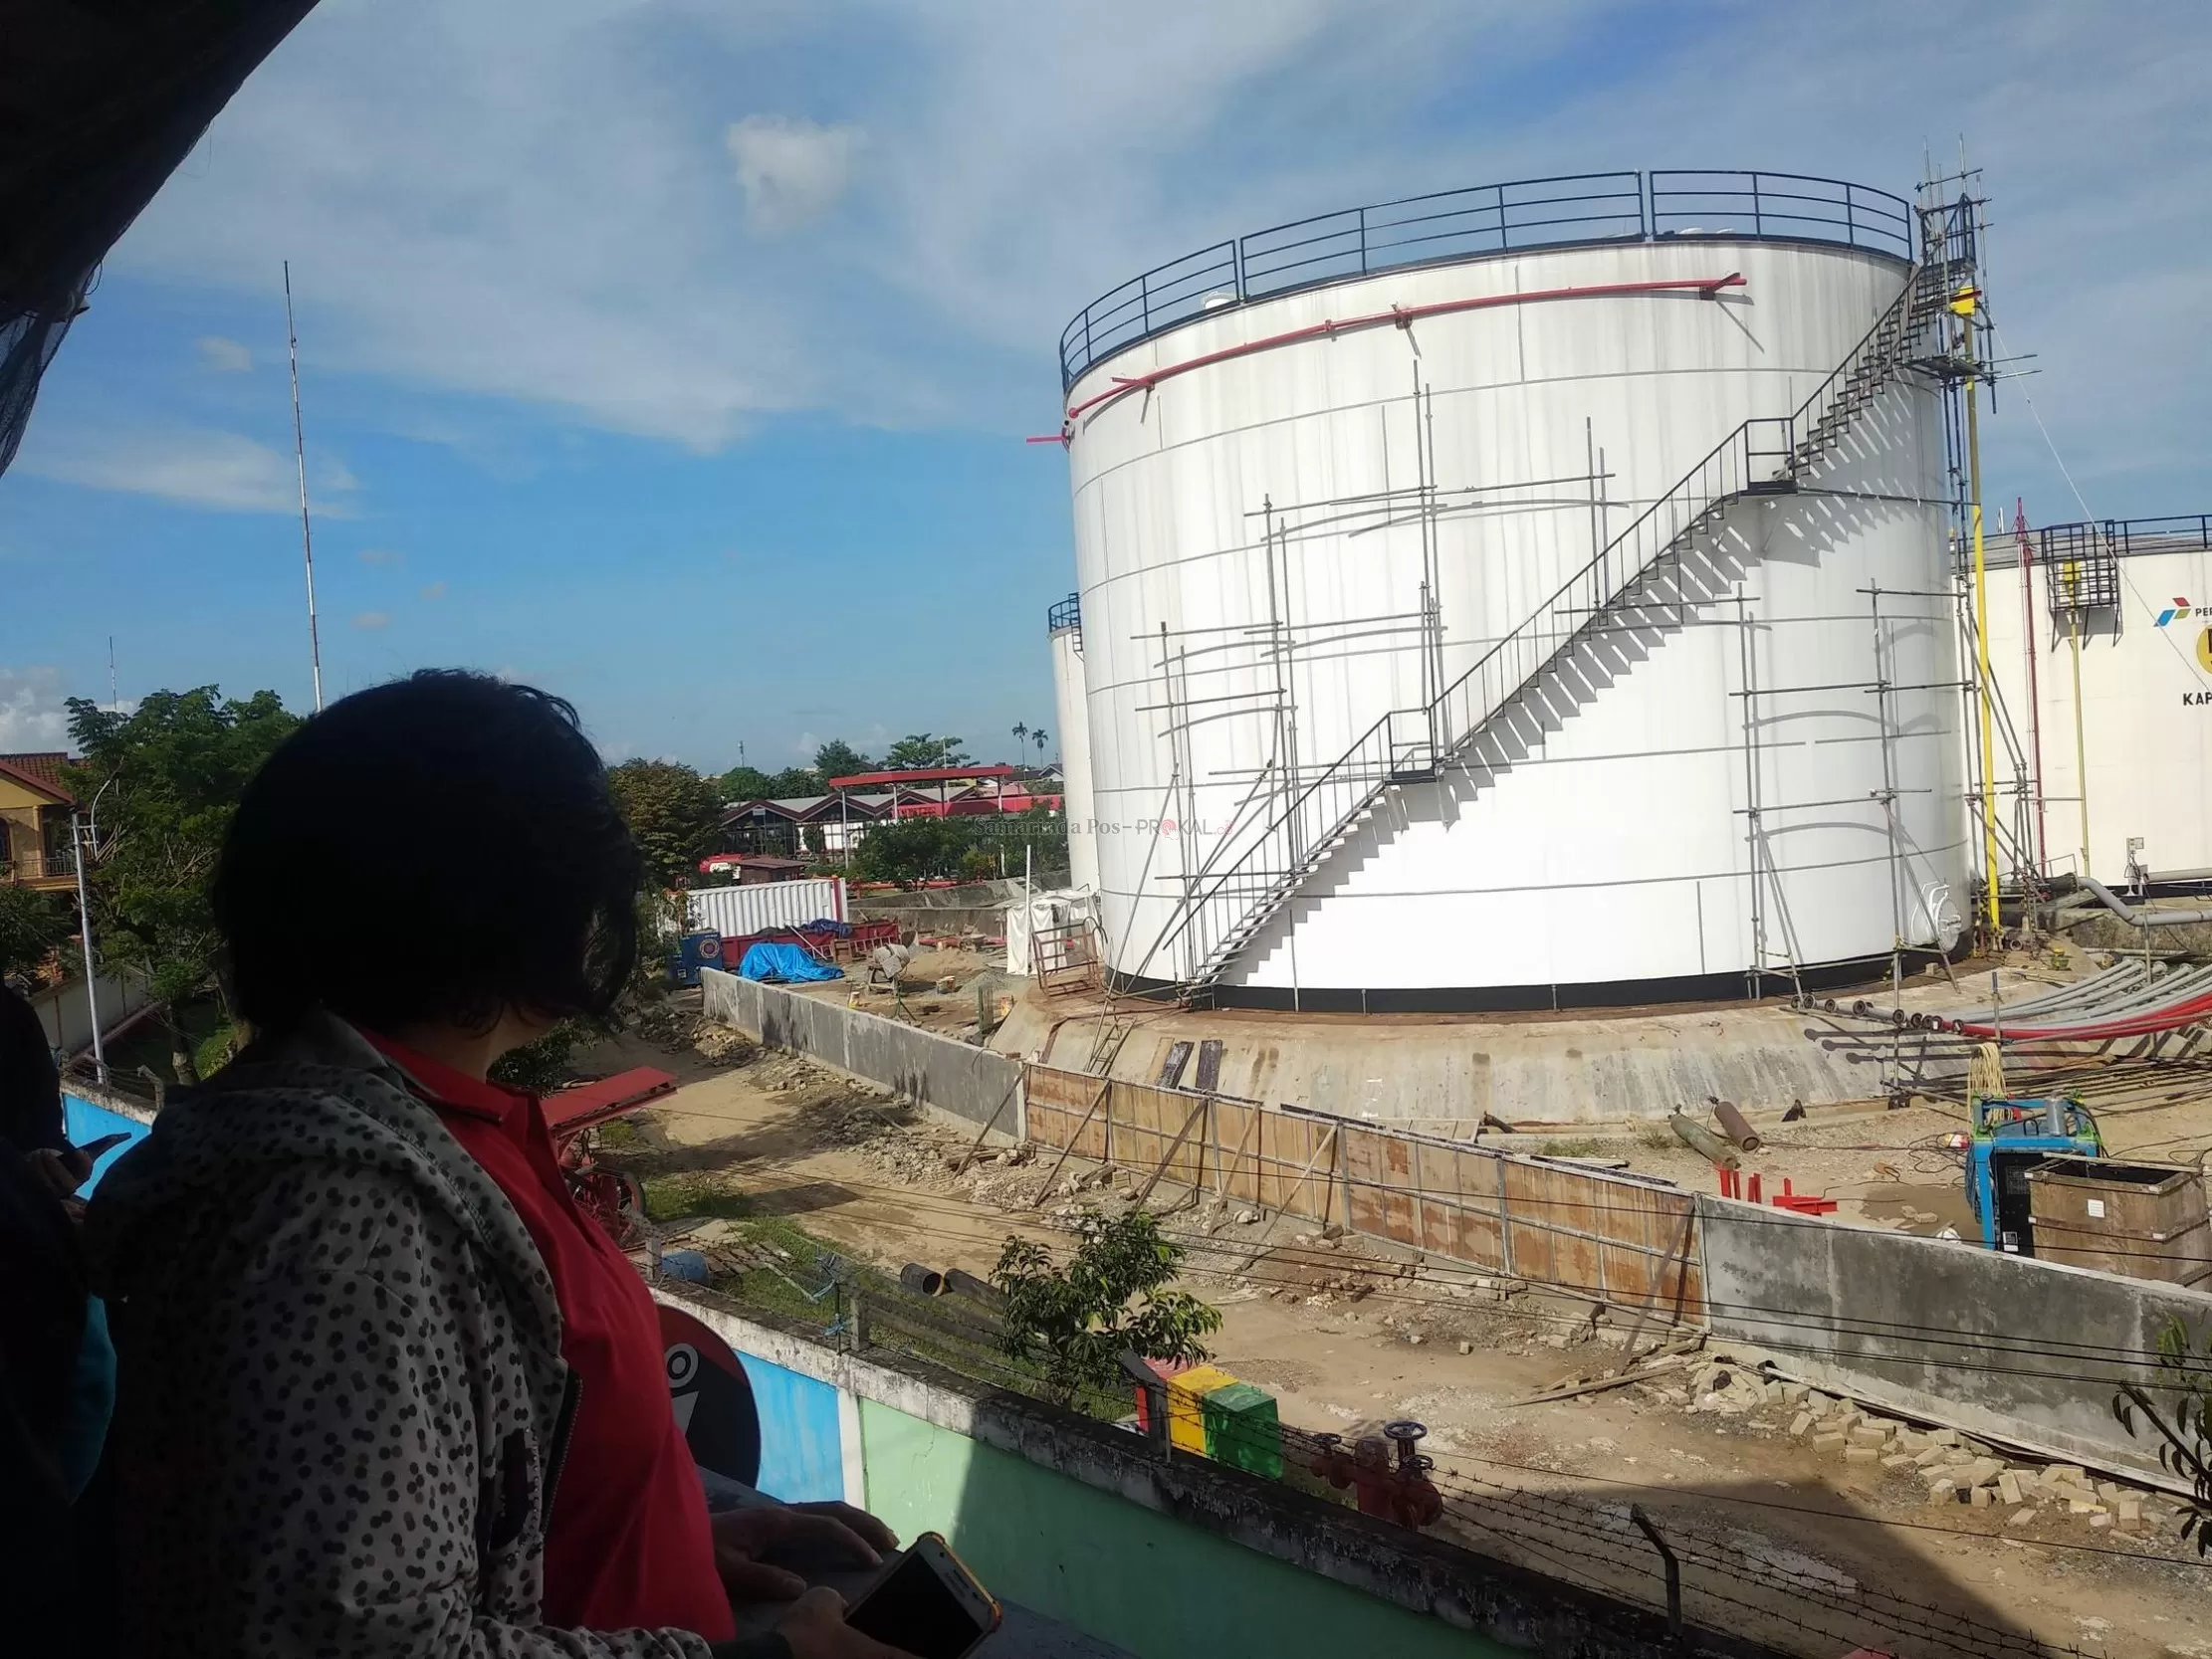 Pembangunan tangki baru yang didirikan di Depo Pertamina di Jalan Cendana, Samarinda Ulu dijamin sudah melalui mekanisme perizinan yang benar.